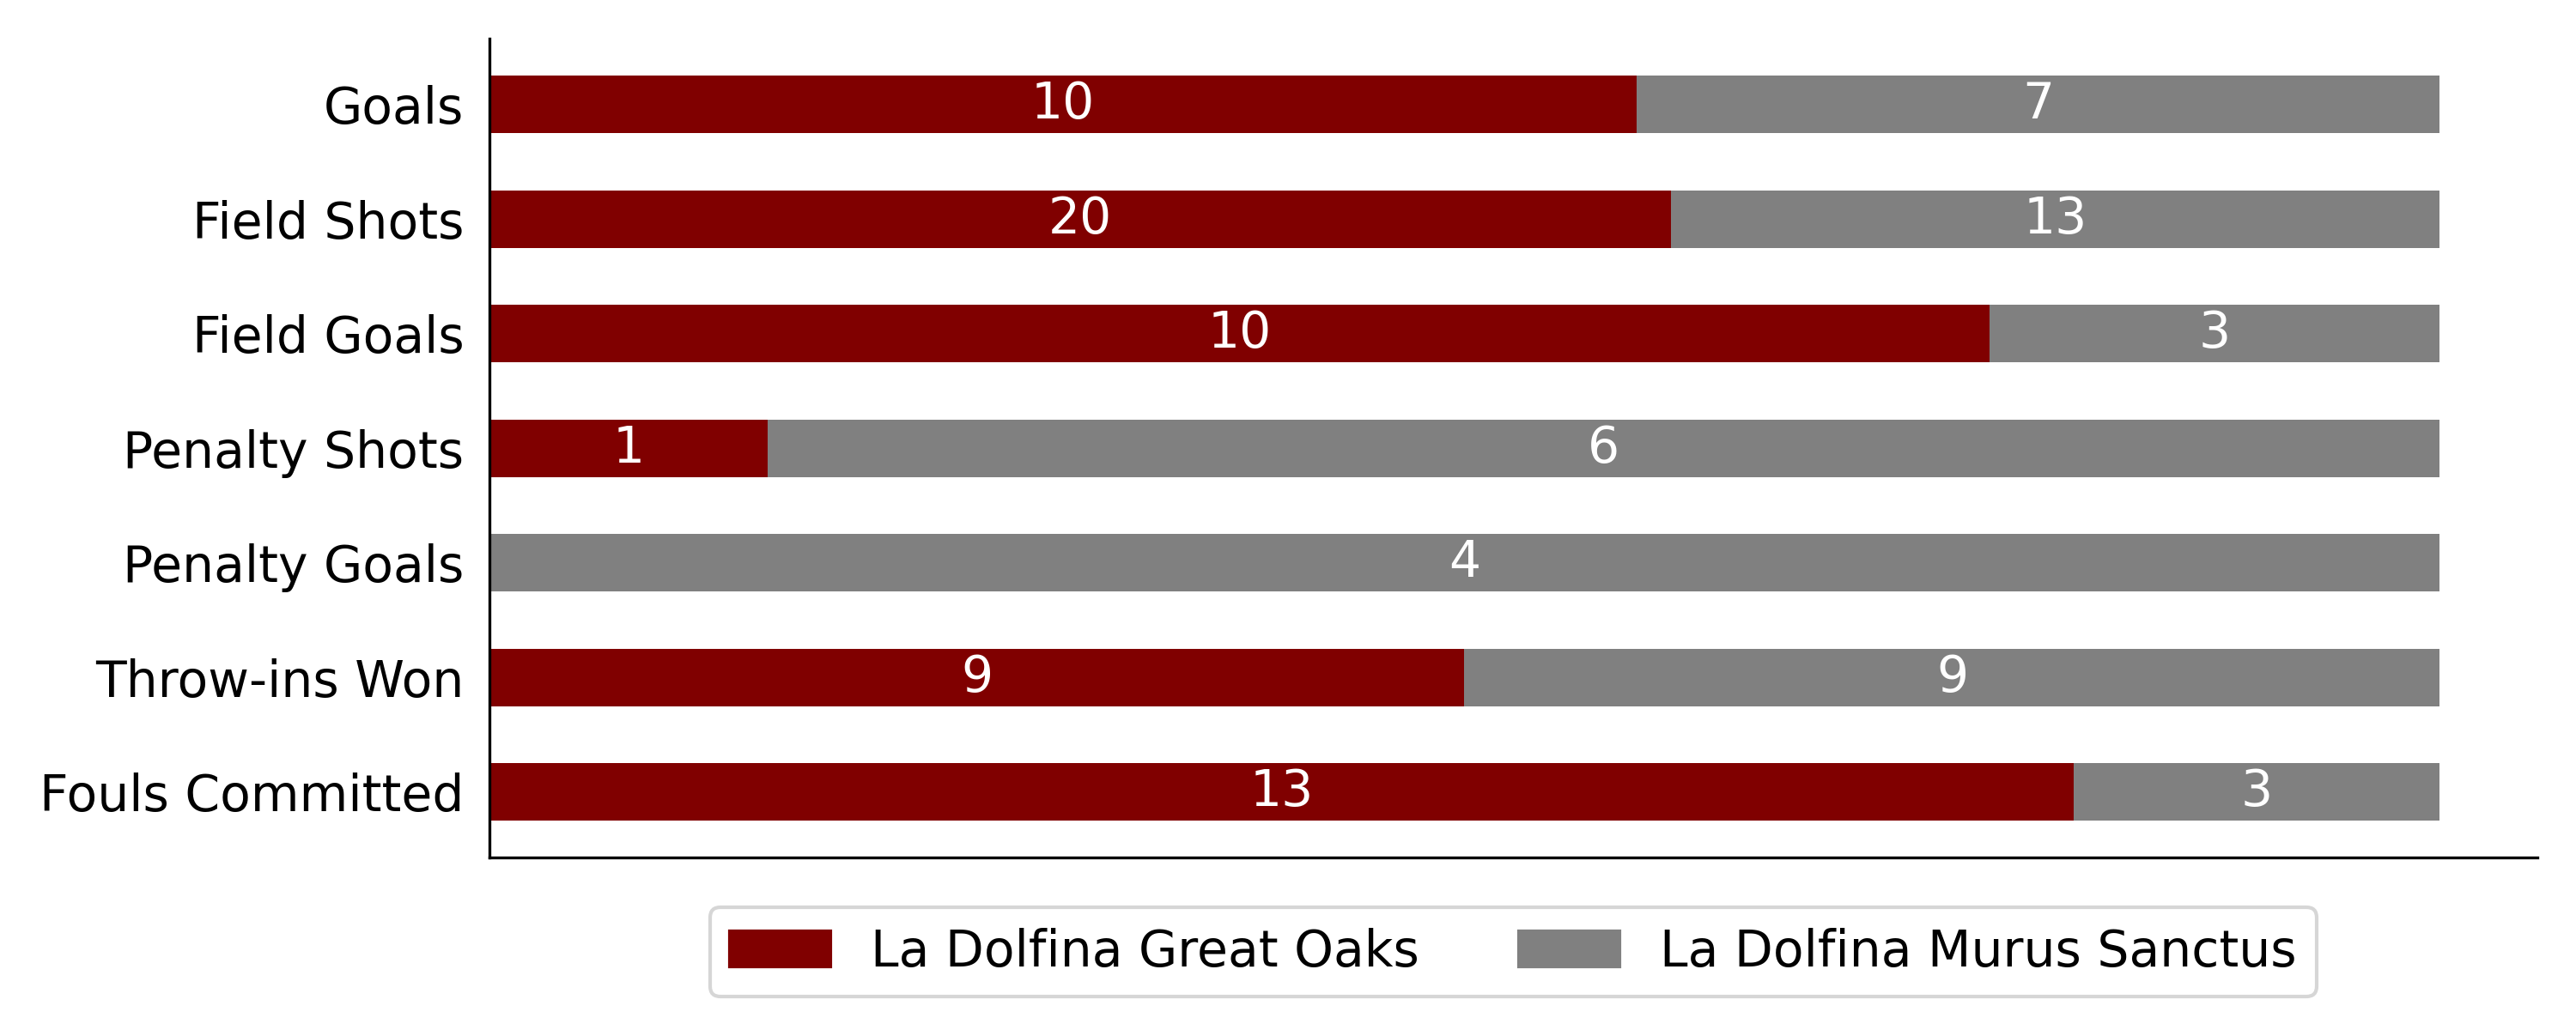 La Dolfina Great Oaks won against La Dolfina Murus Sanctus 6